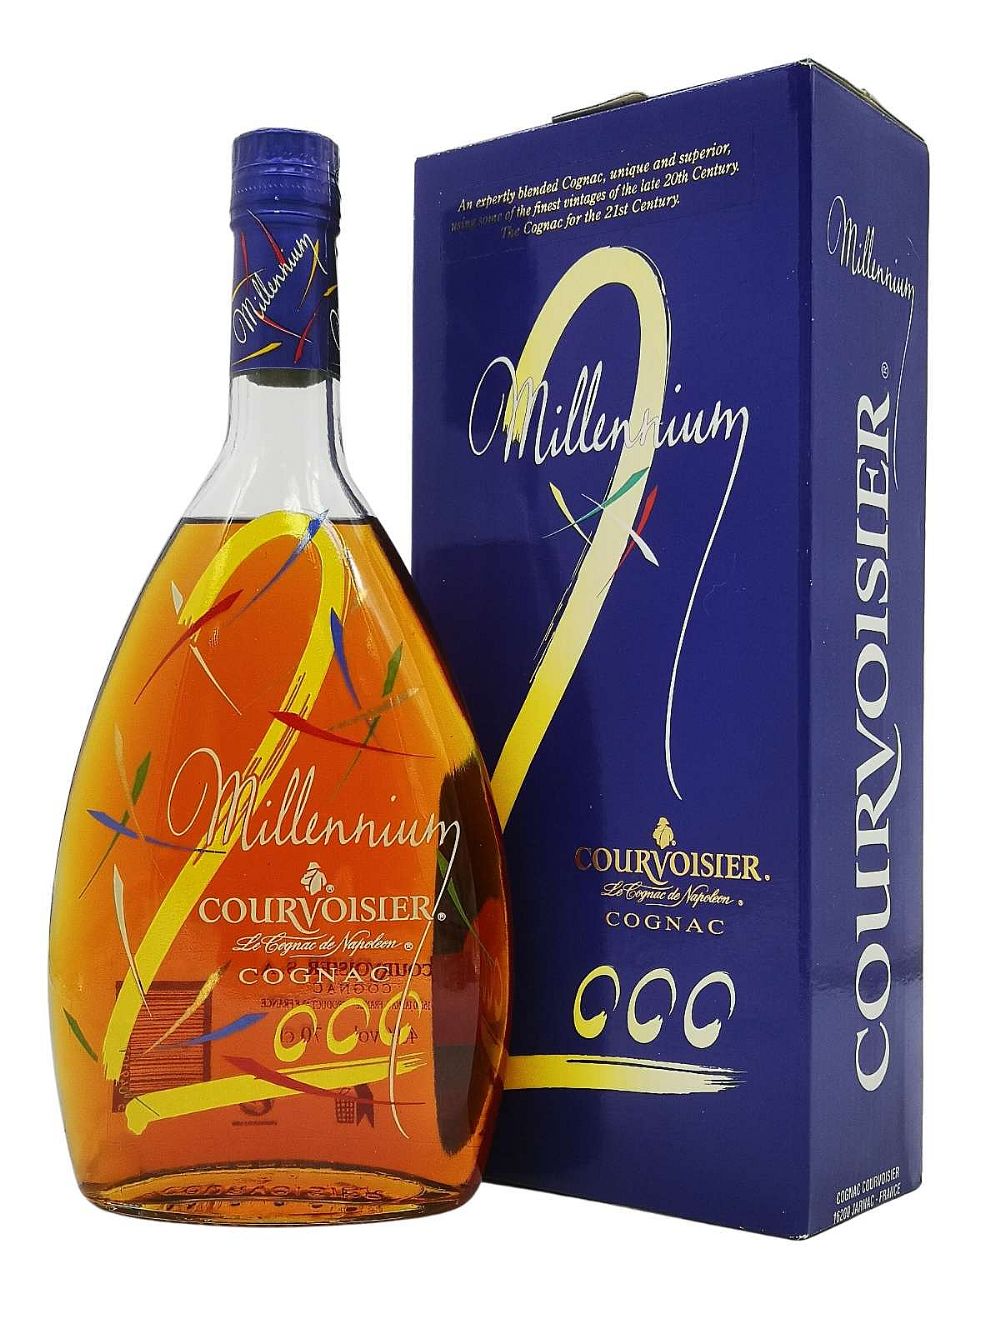 Courvoisier 2000 Millenium Cognac